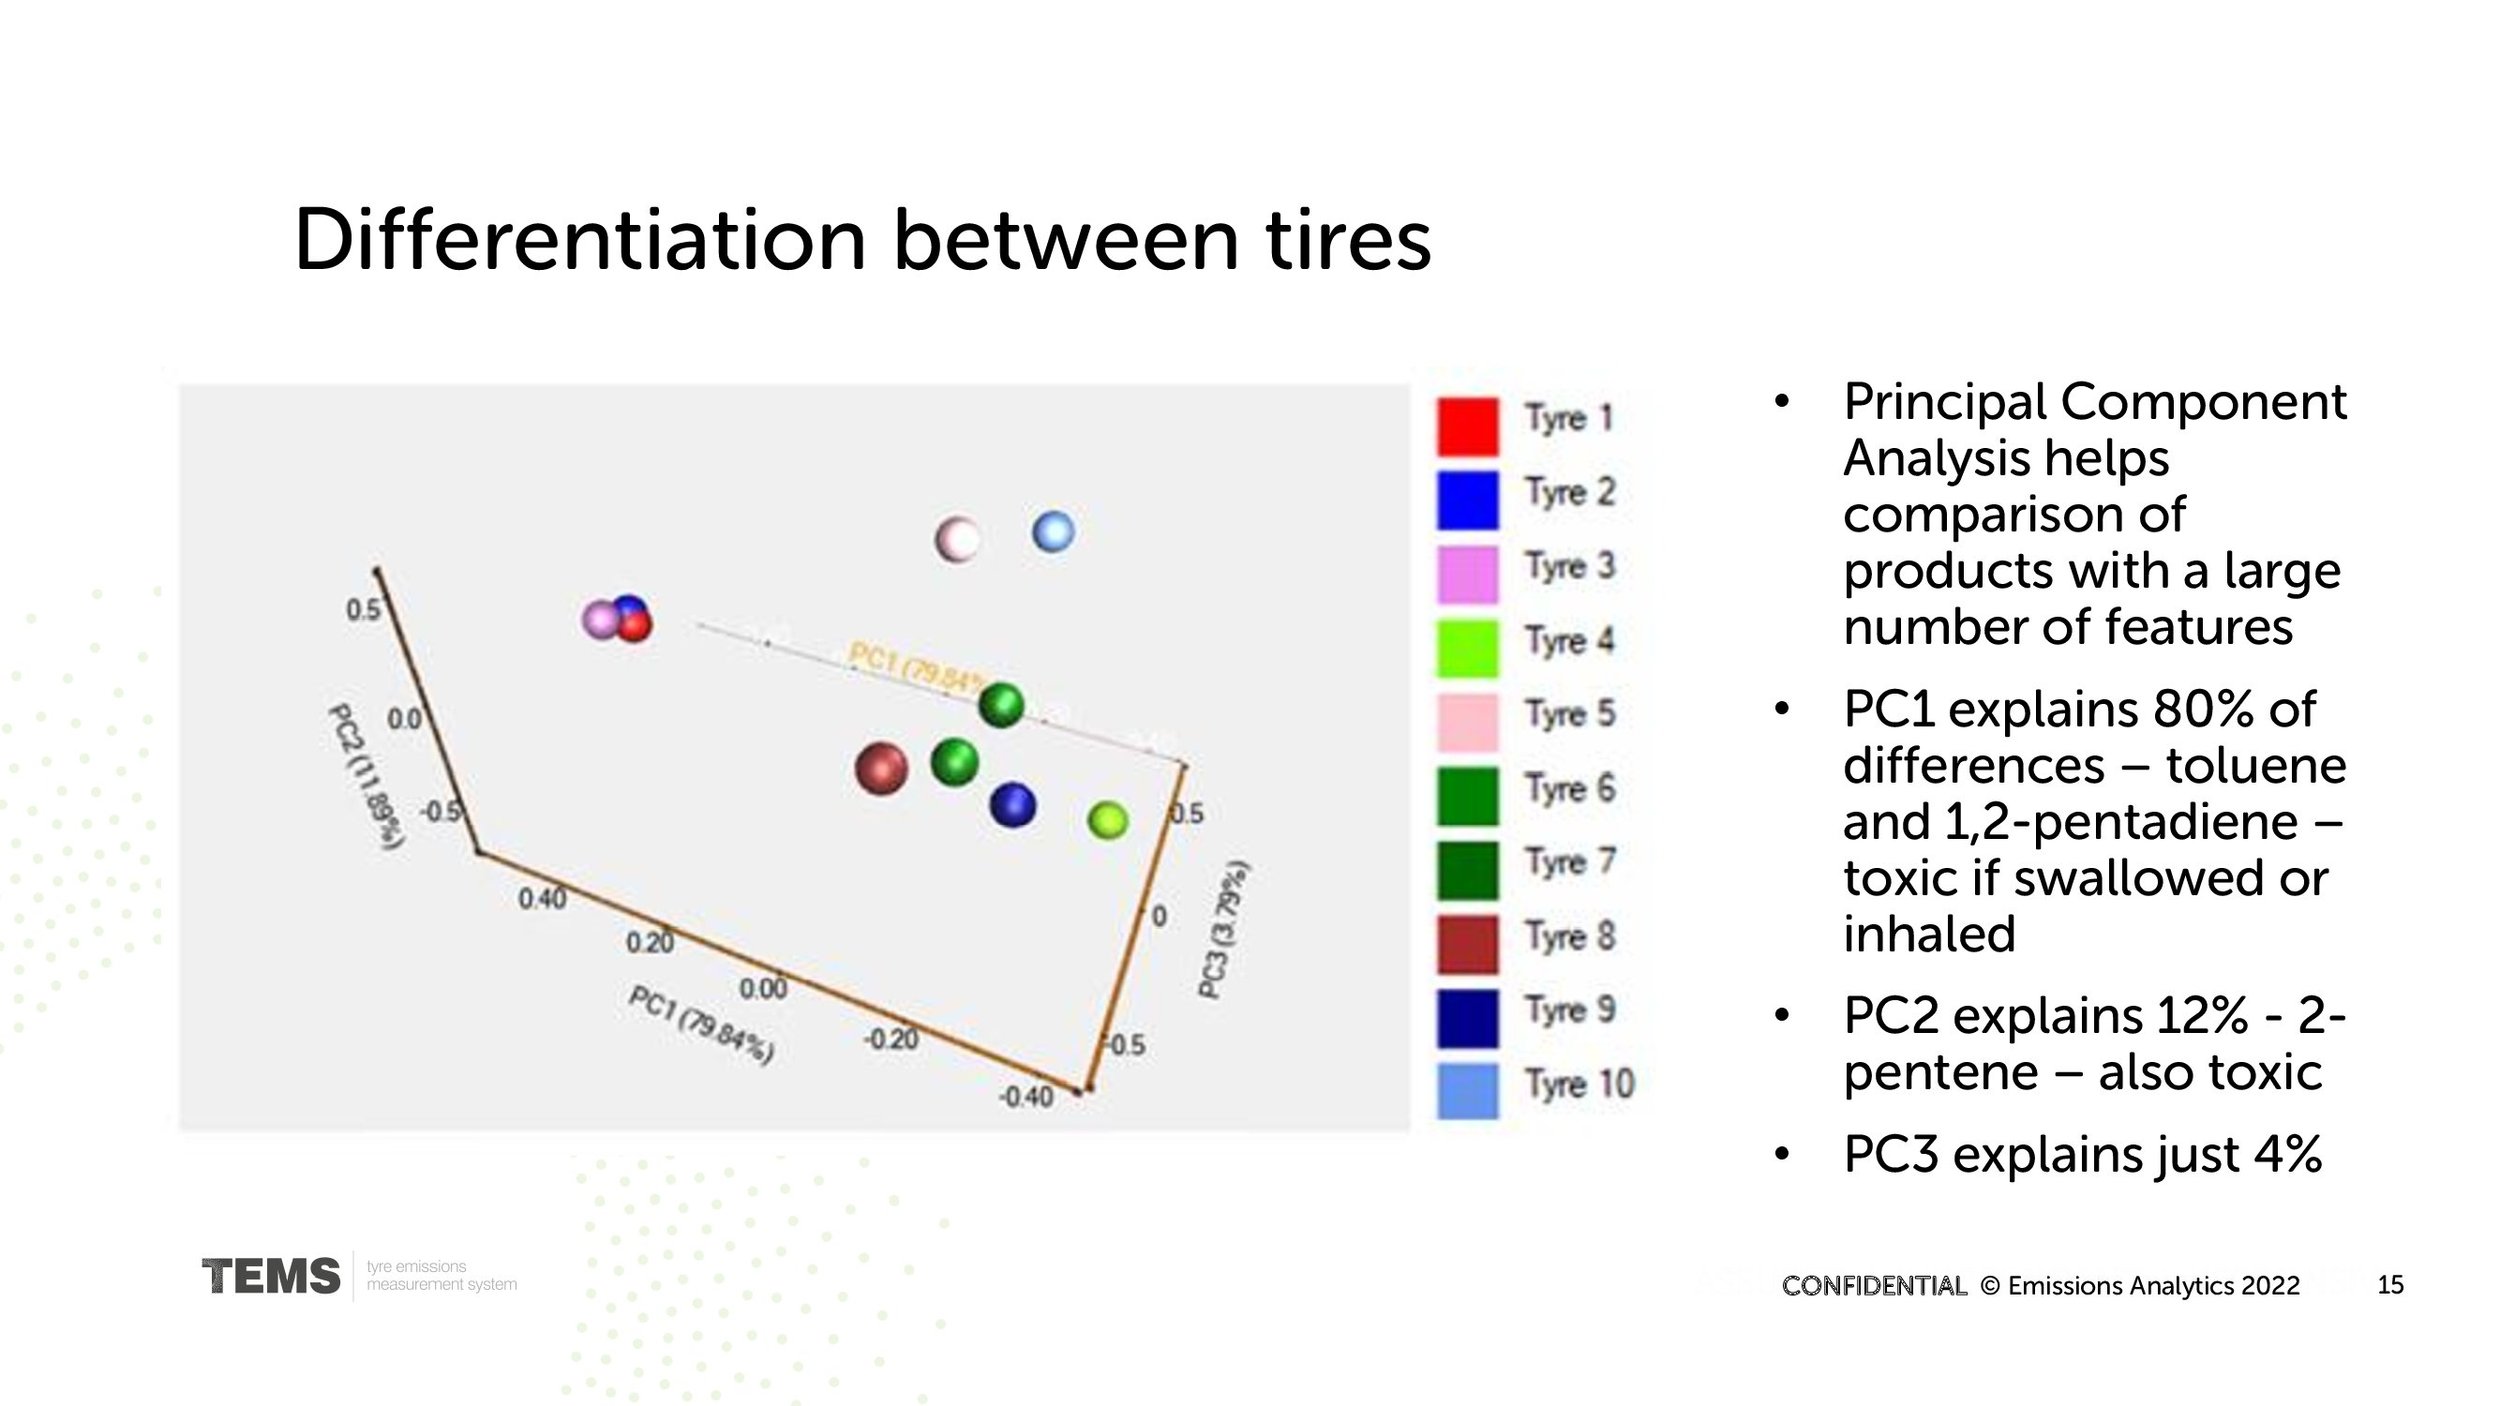 Emissions Analytics CRC tires presentation 16 March 2022_00015.jpg